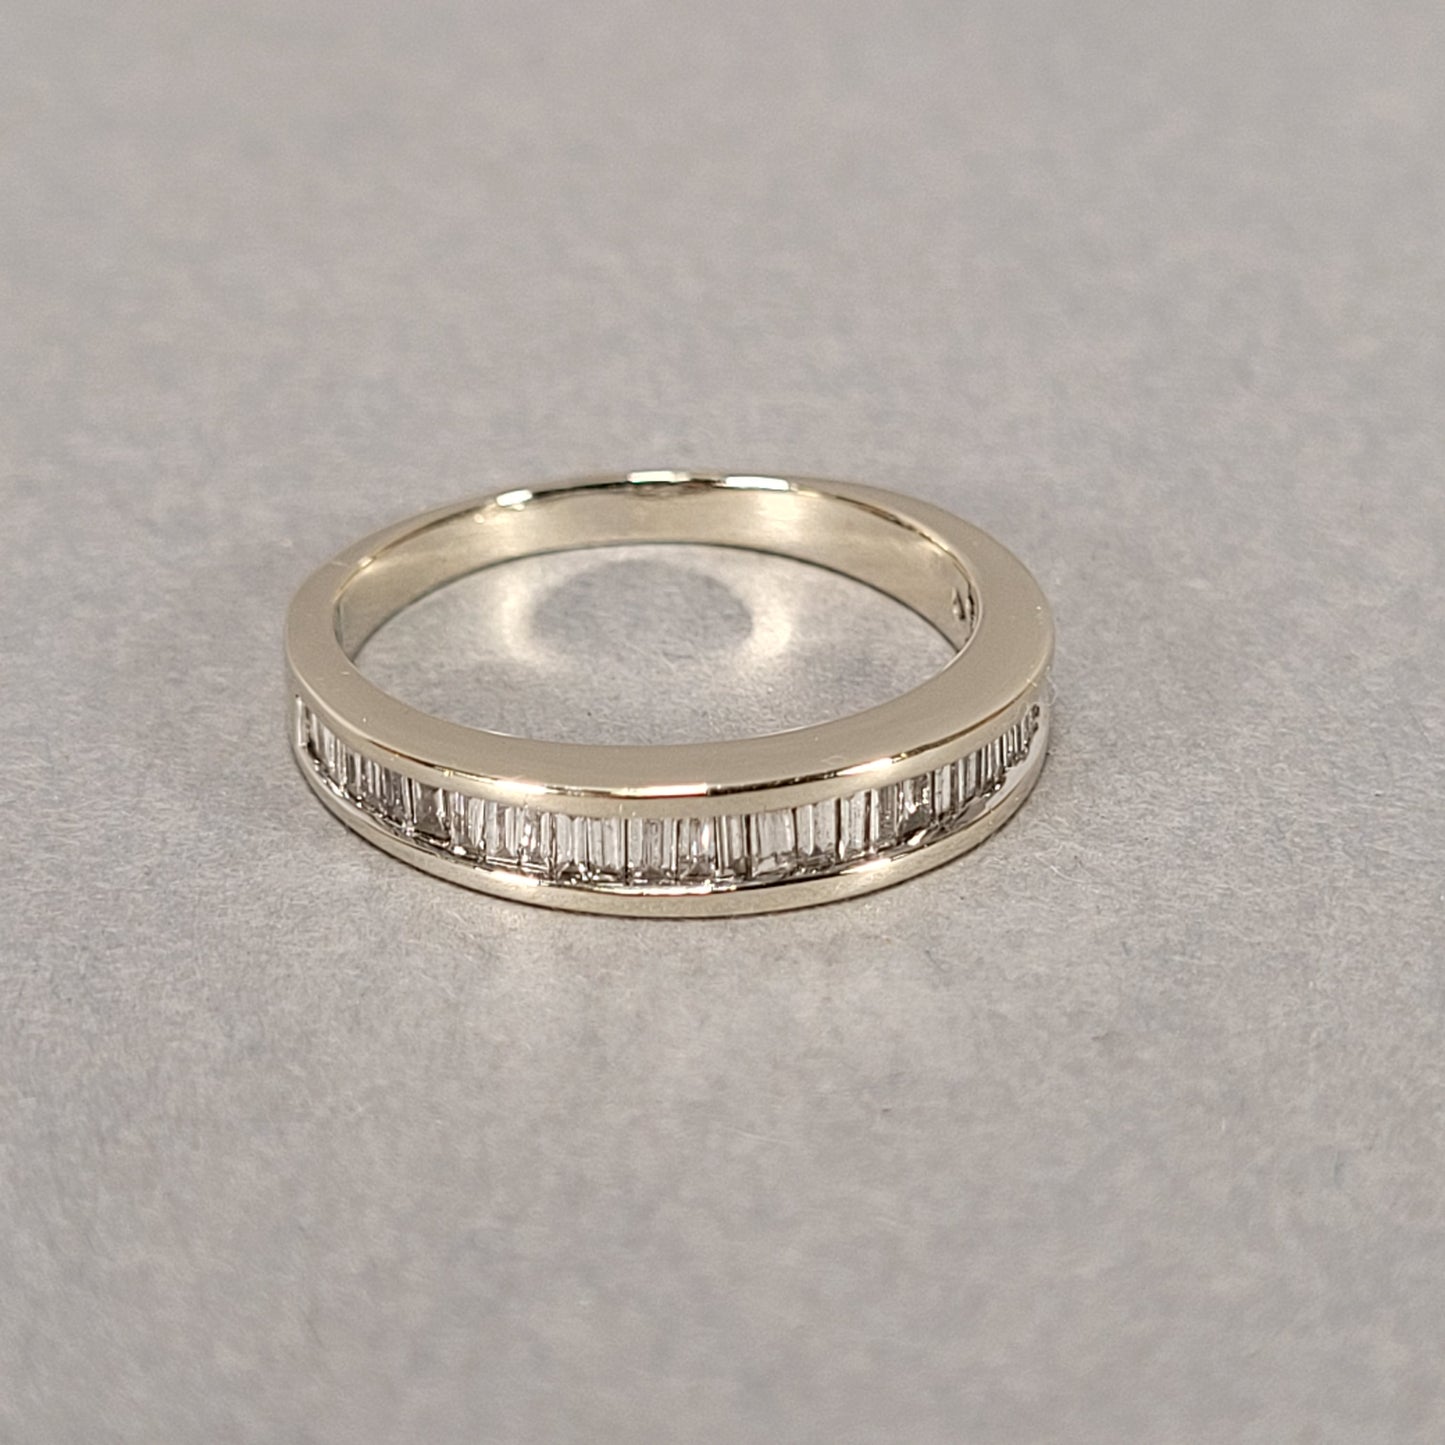 Lady's 14k White Gold & Diamond Ring 3.3g